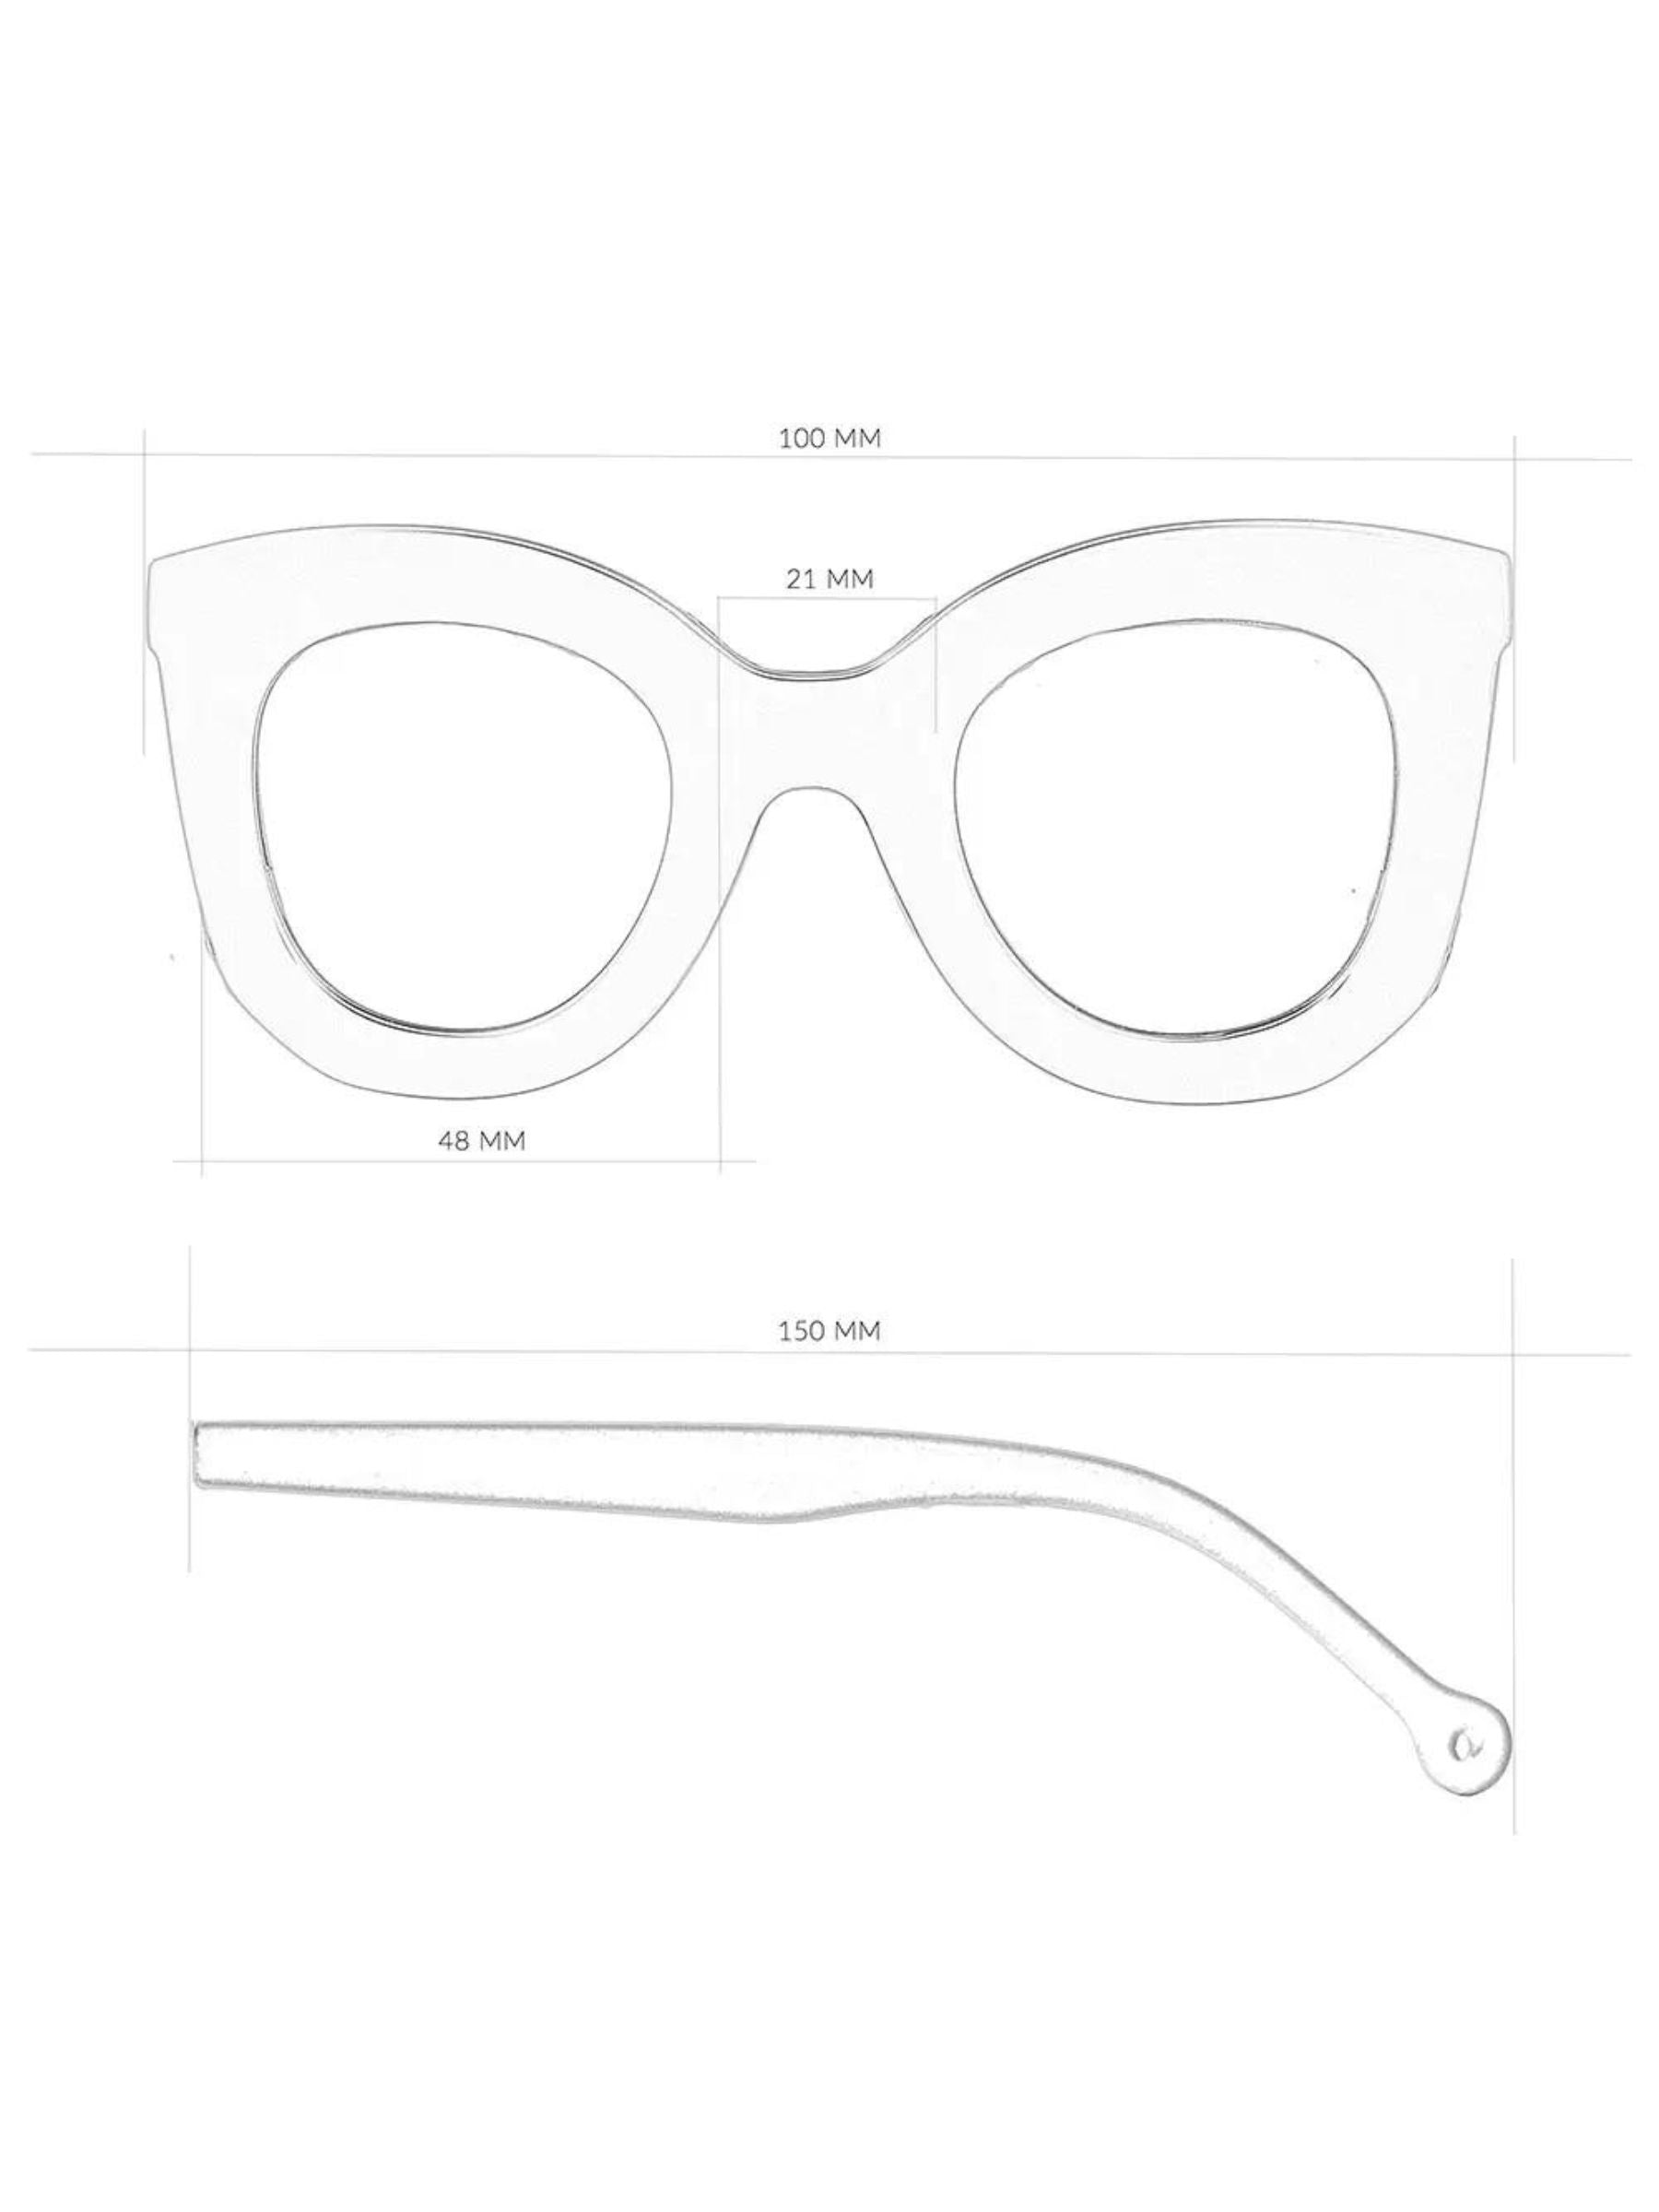 Sunglasses Jungla Recycled Plastic | Parafina